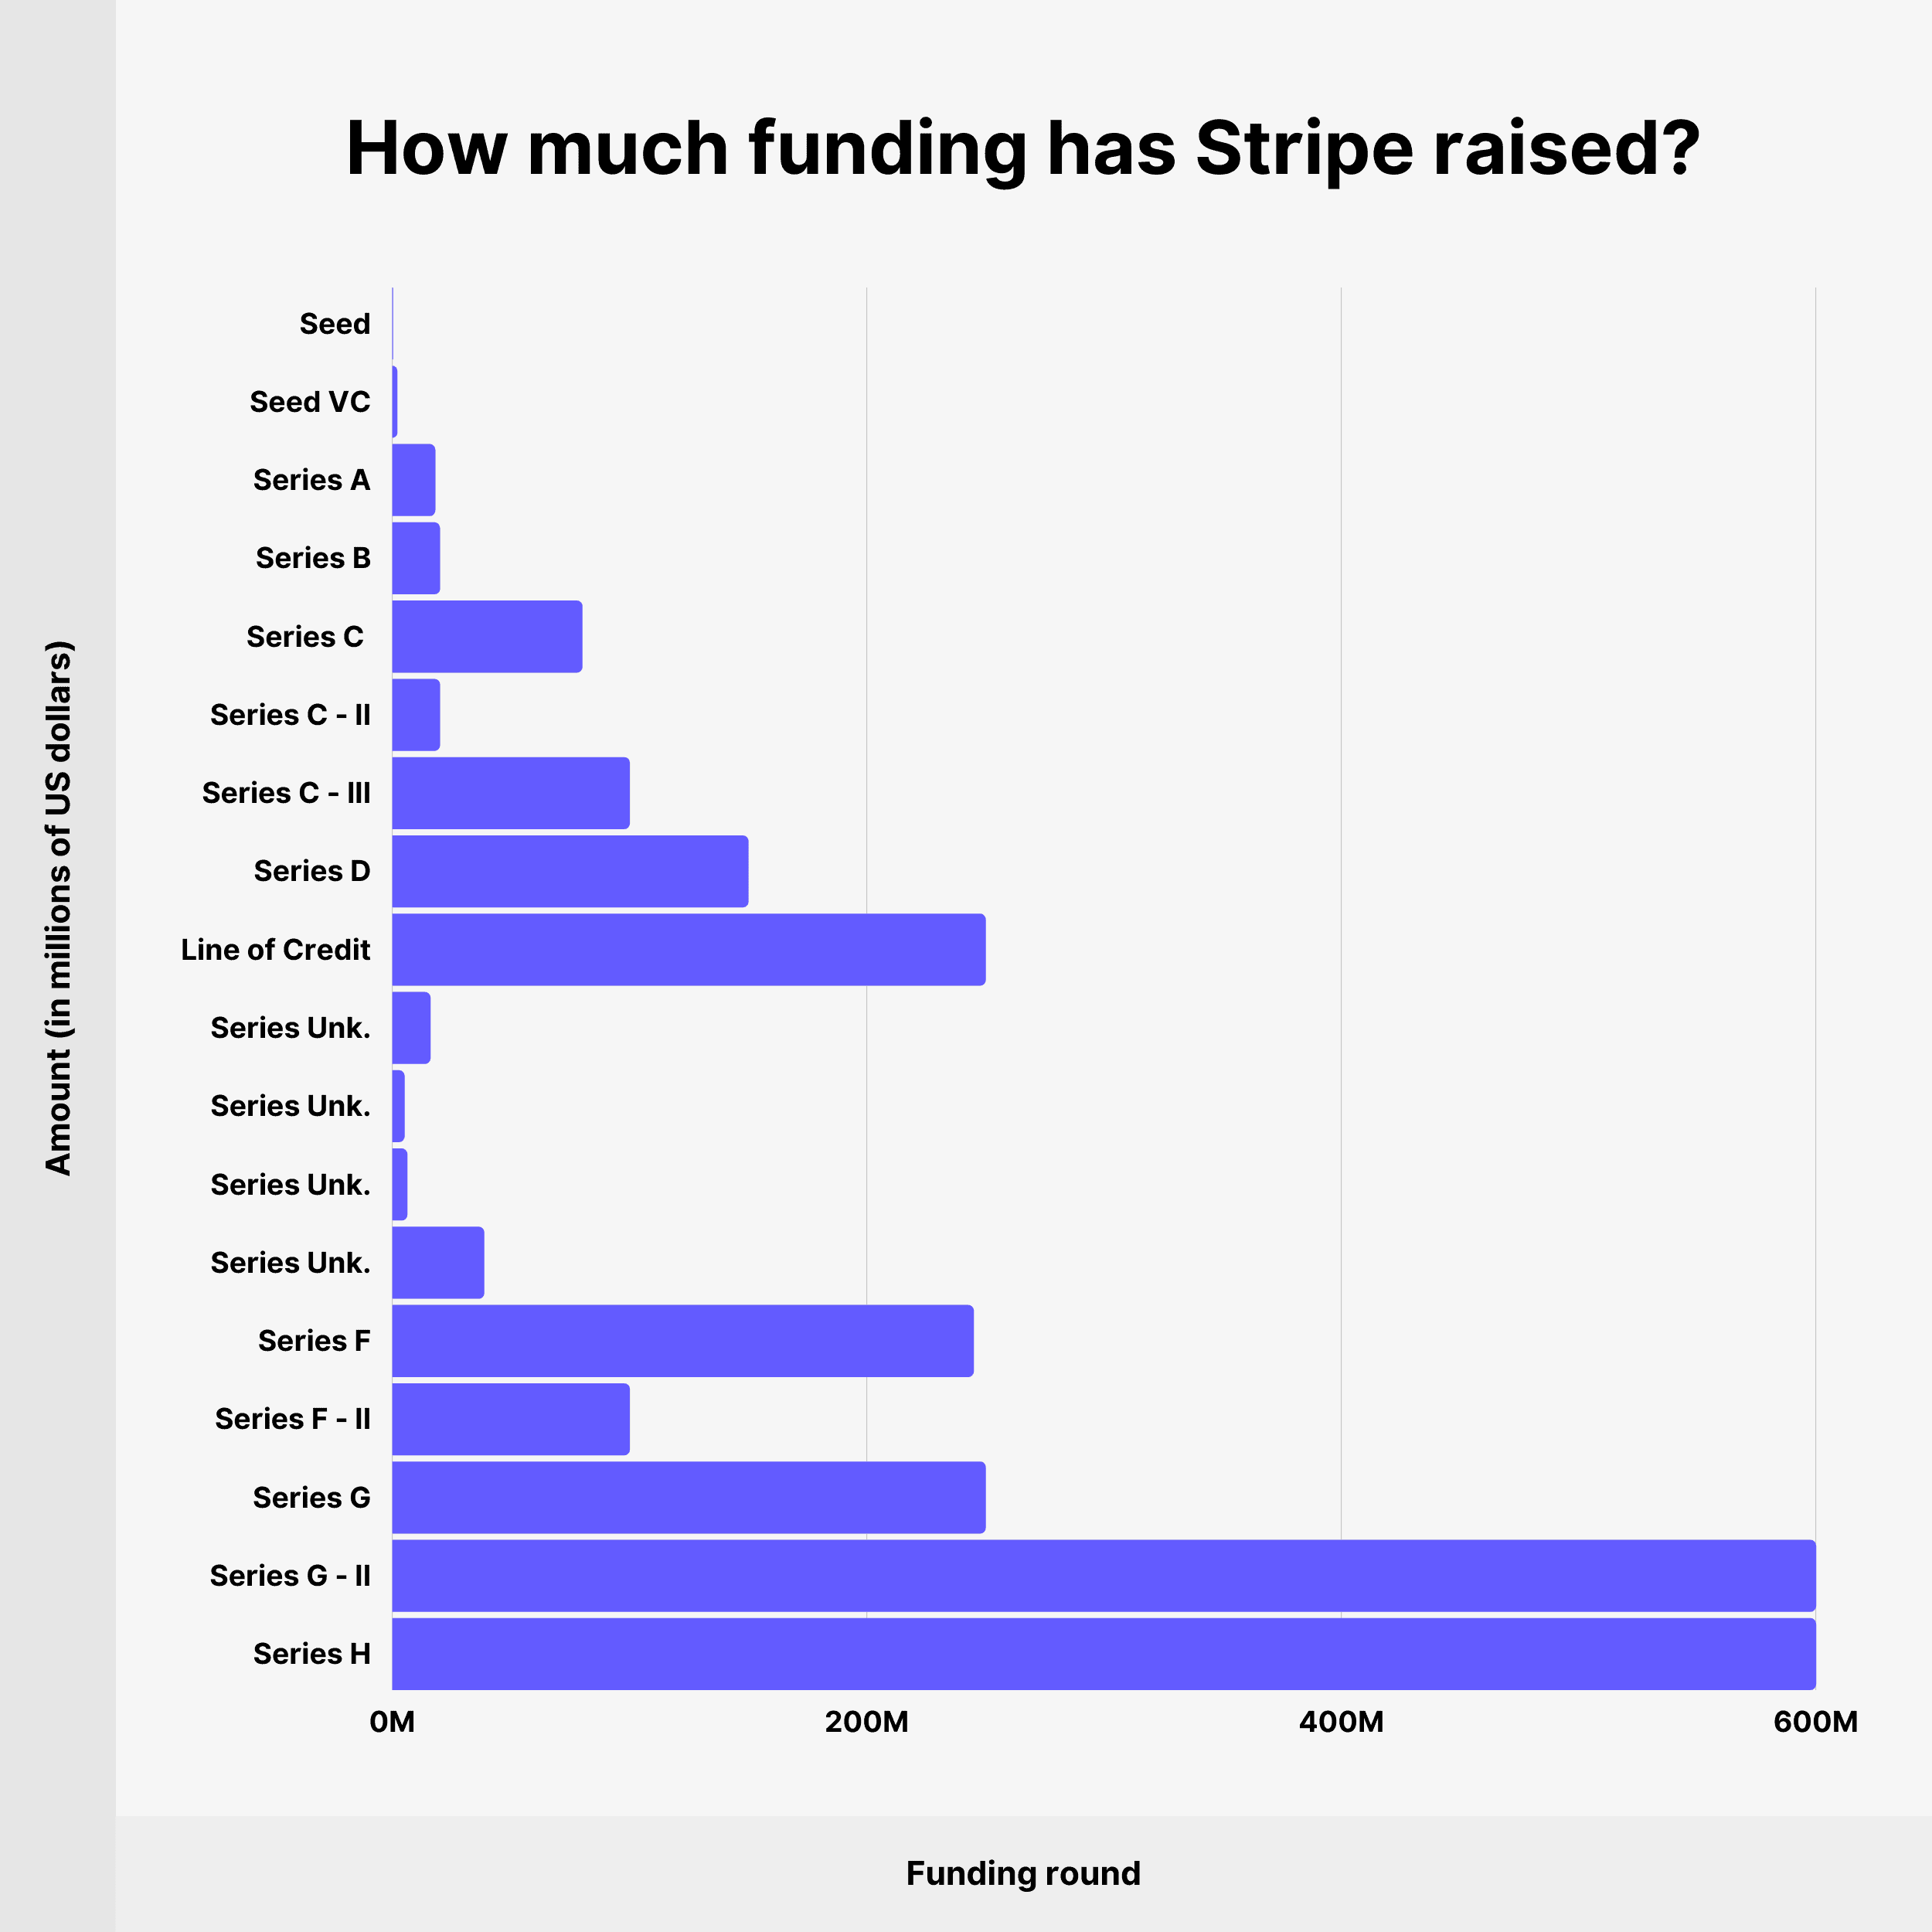 How much funding has Stripe raised?